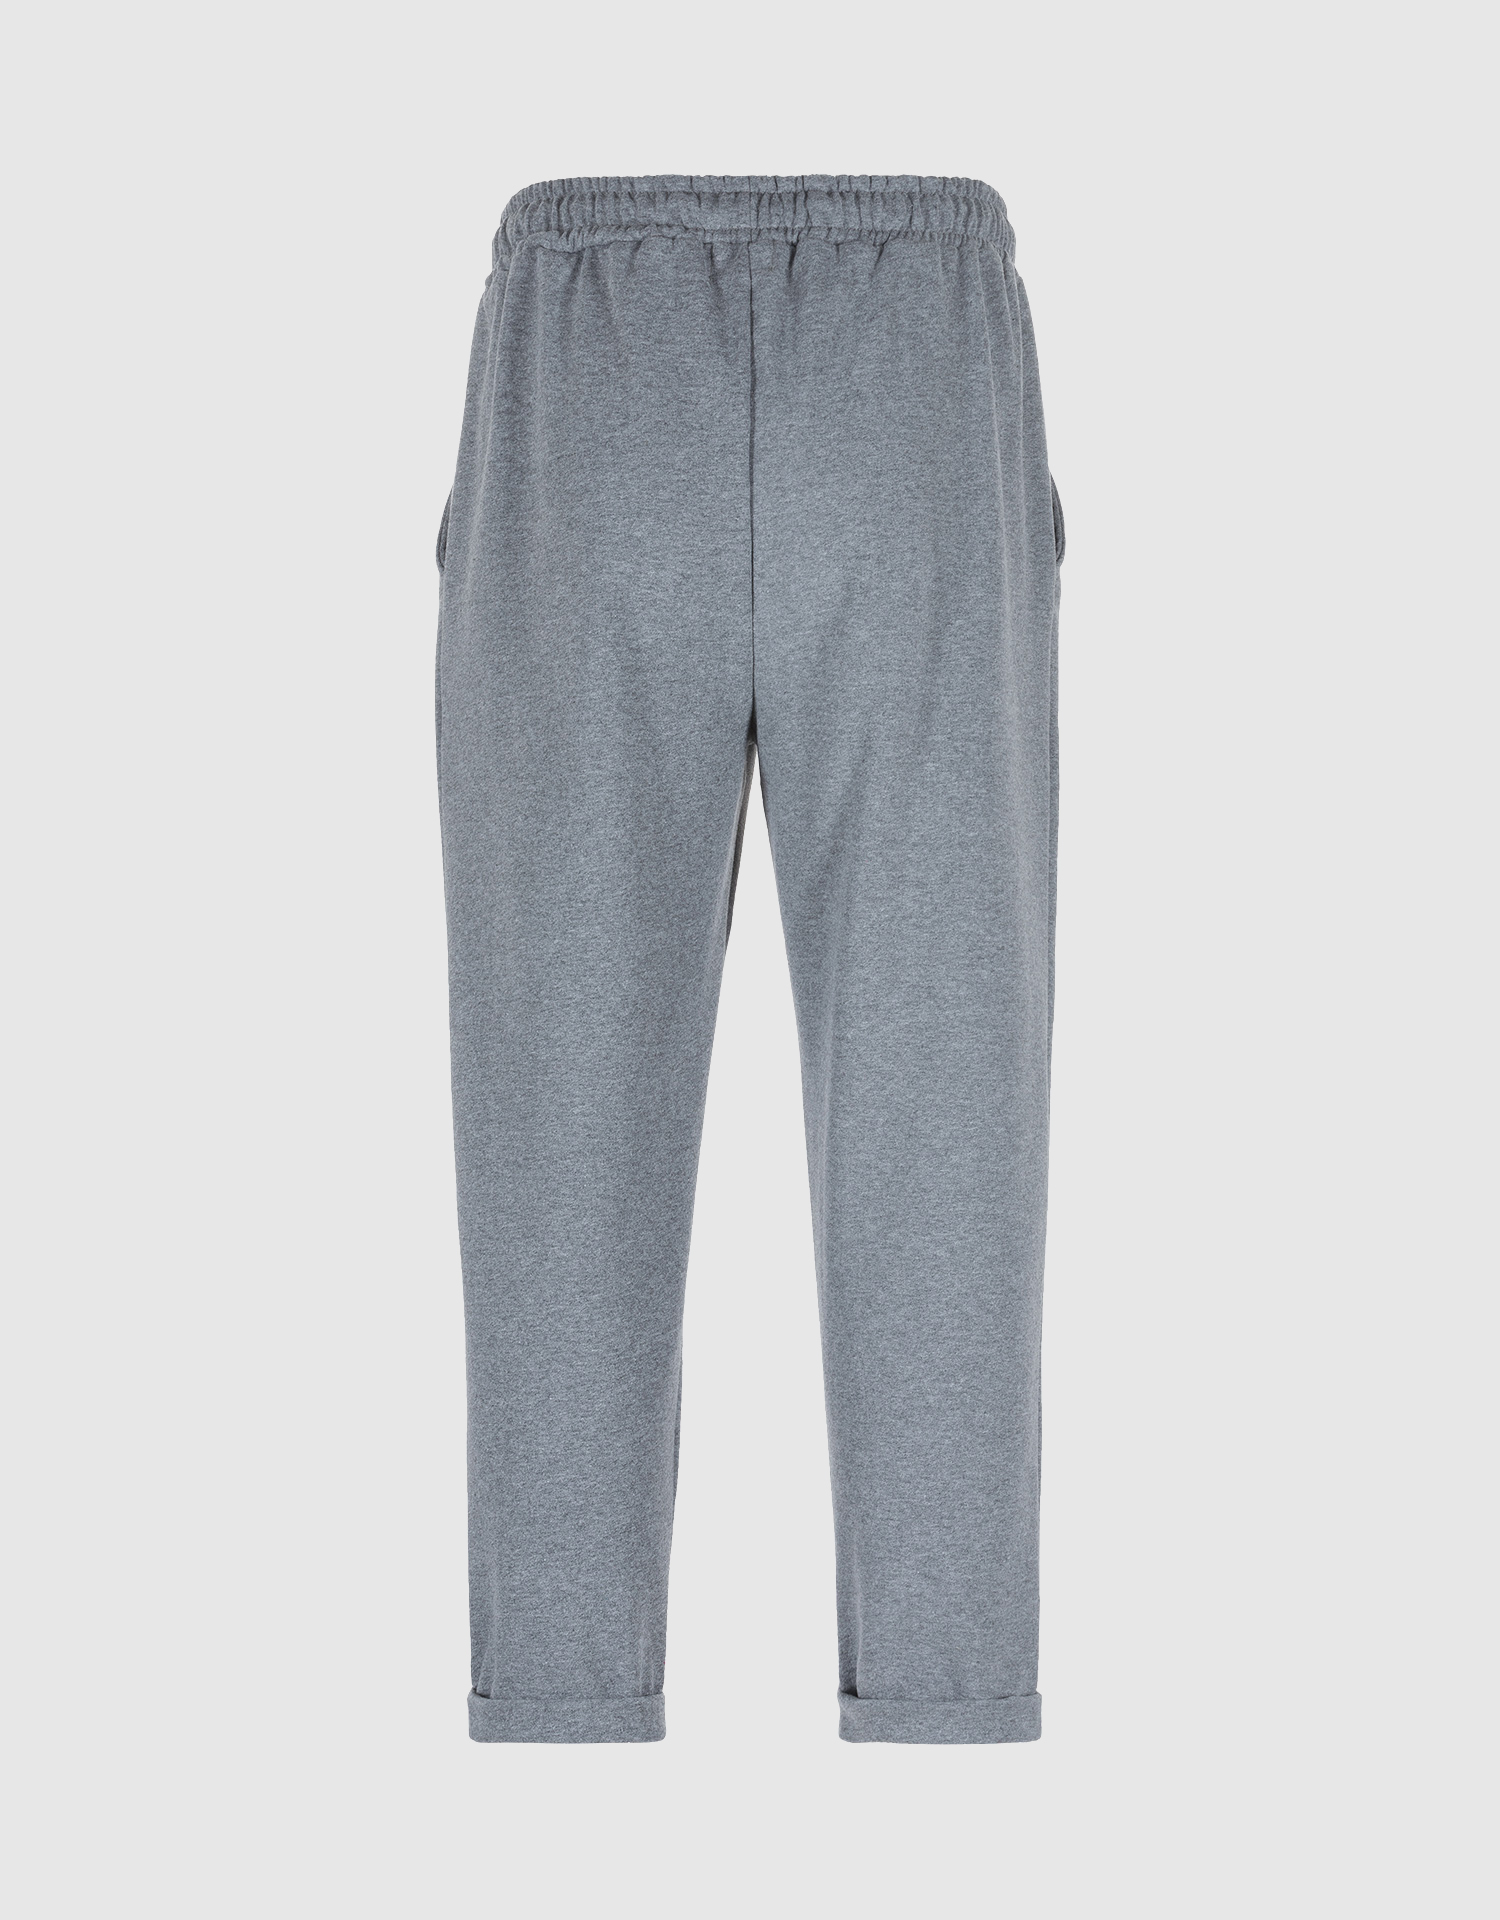 ninesquared-woman-pants-jusse-grey-back